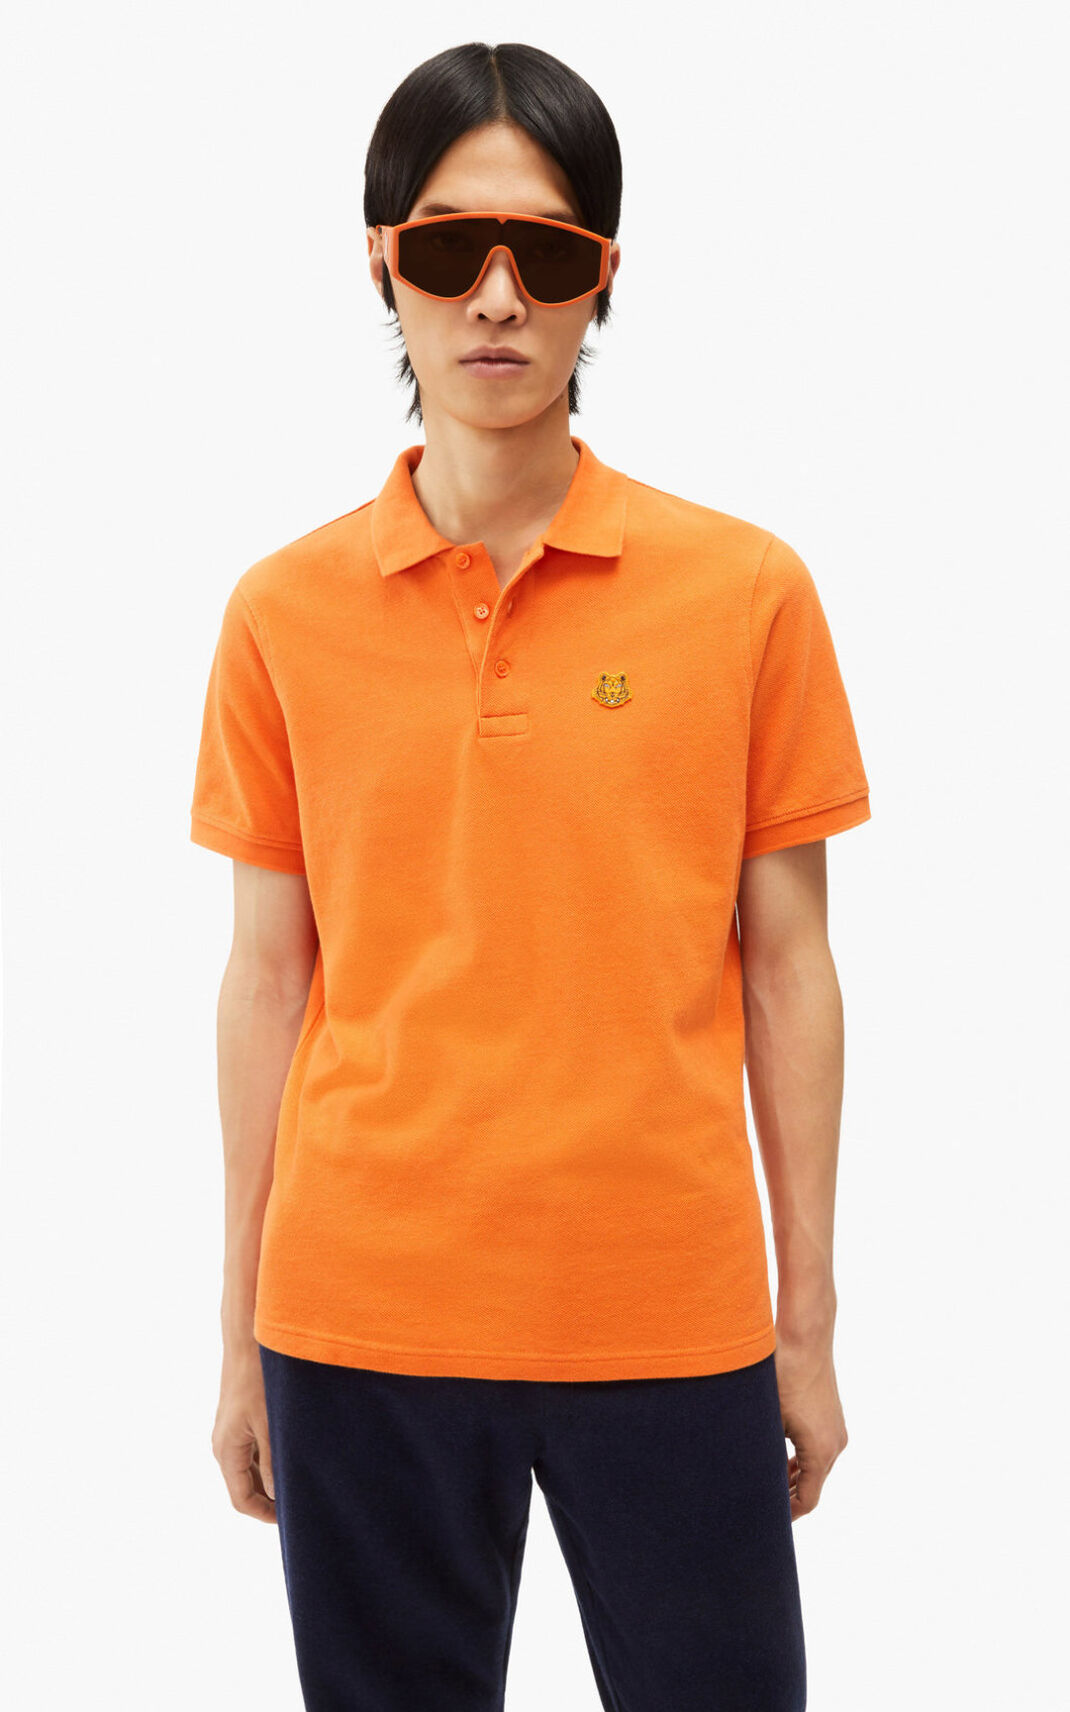 Polo Kenzo Tiger Crest Hombre Naranjas - SKU.5225554